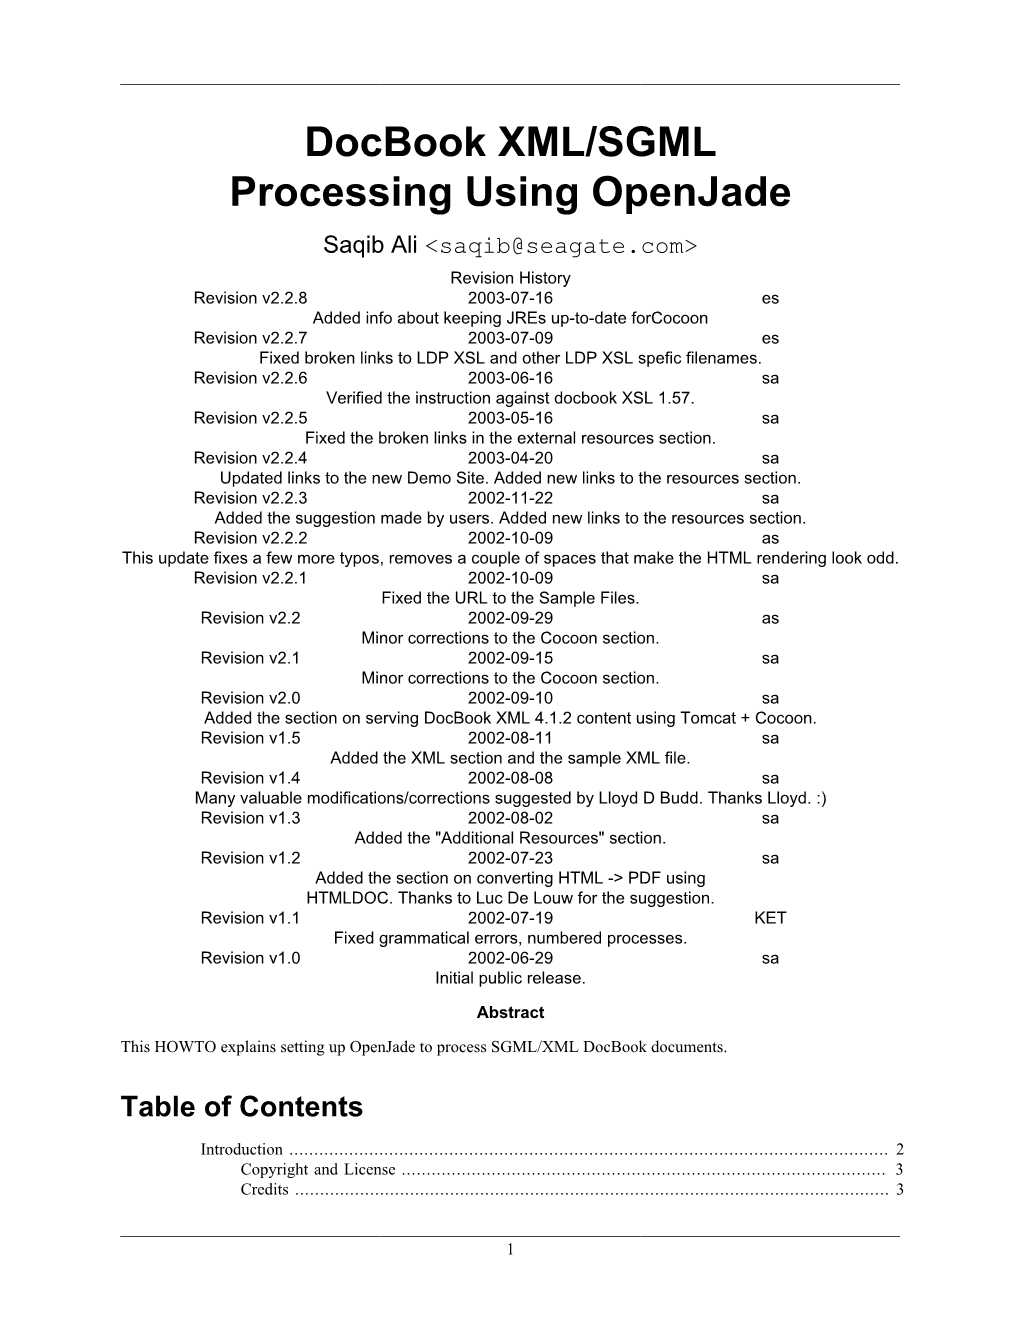 Docbook XML/SGML Processing Using Openjade